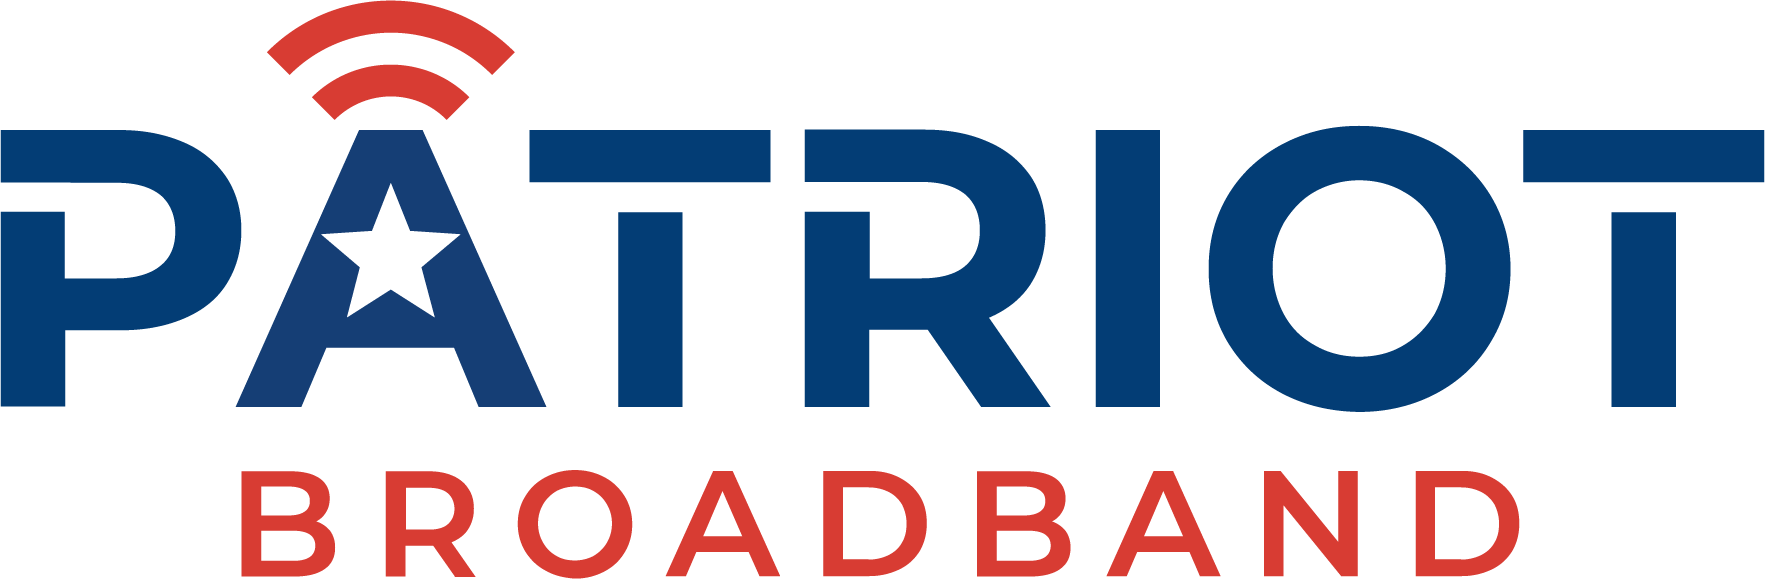 Patriot Broadband Franchise - Logo